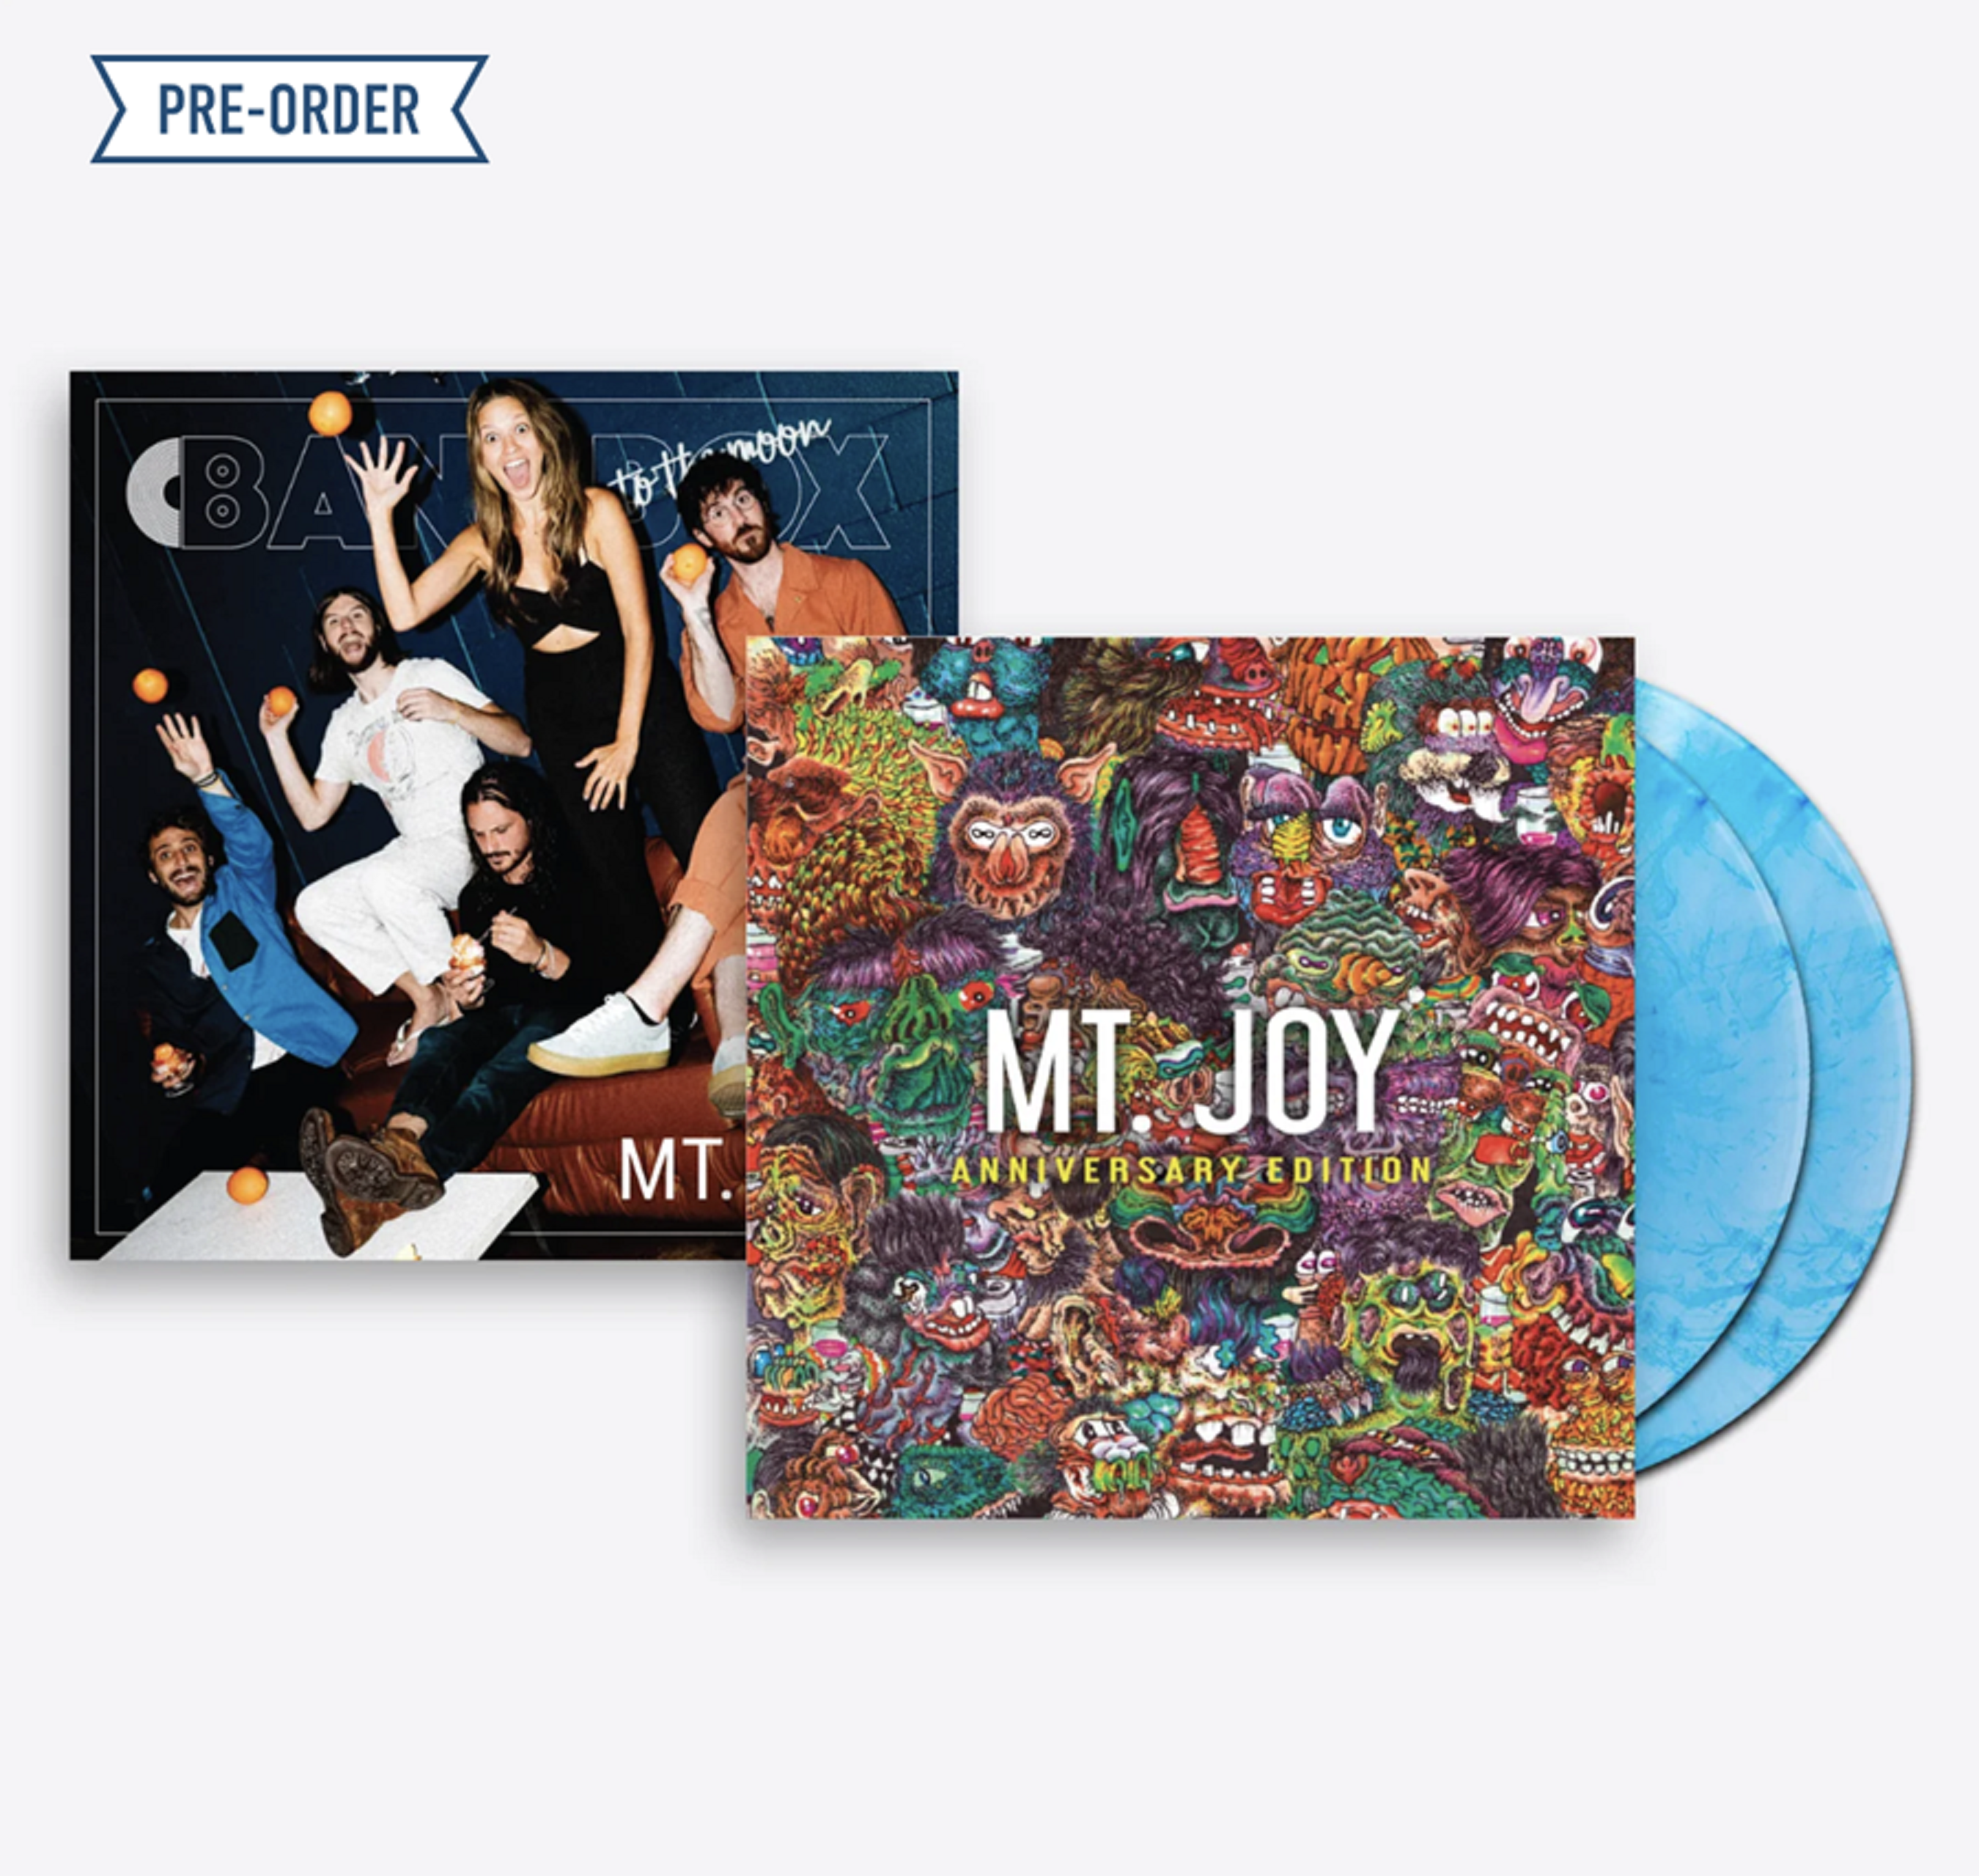 MT. JOY announces special 5th anniversary edition of S/T debut LP via Bandbox